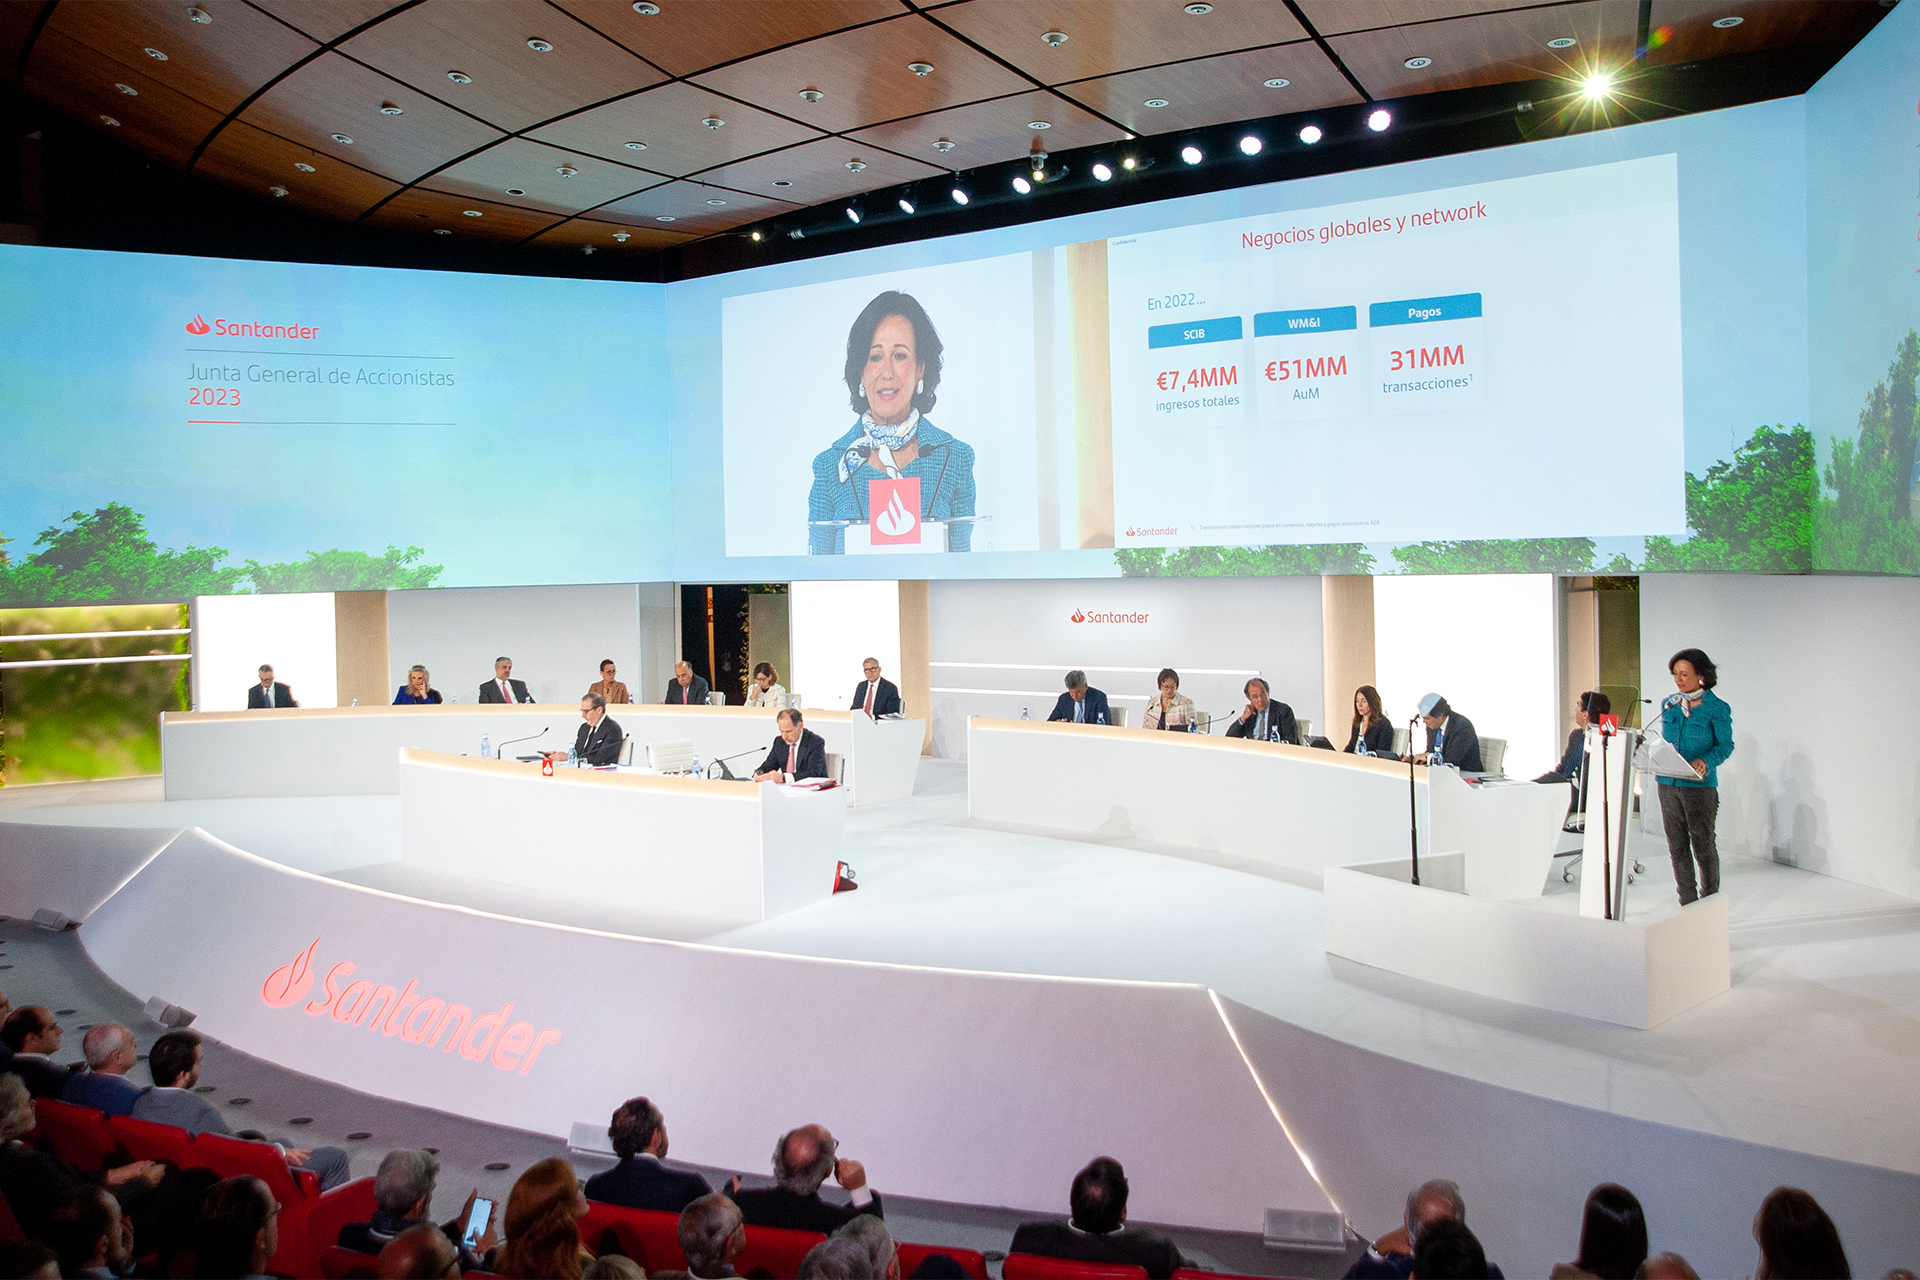 2014 Santander International Banking Conference